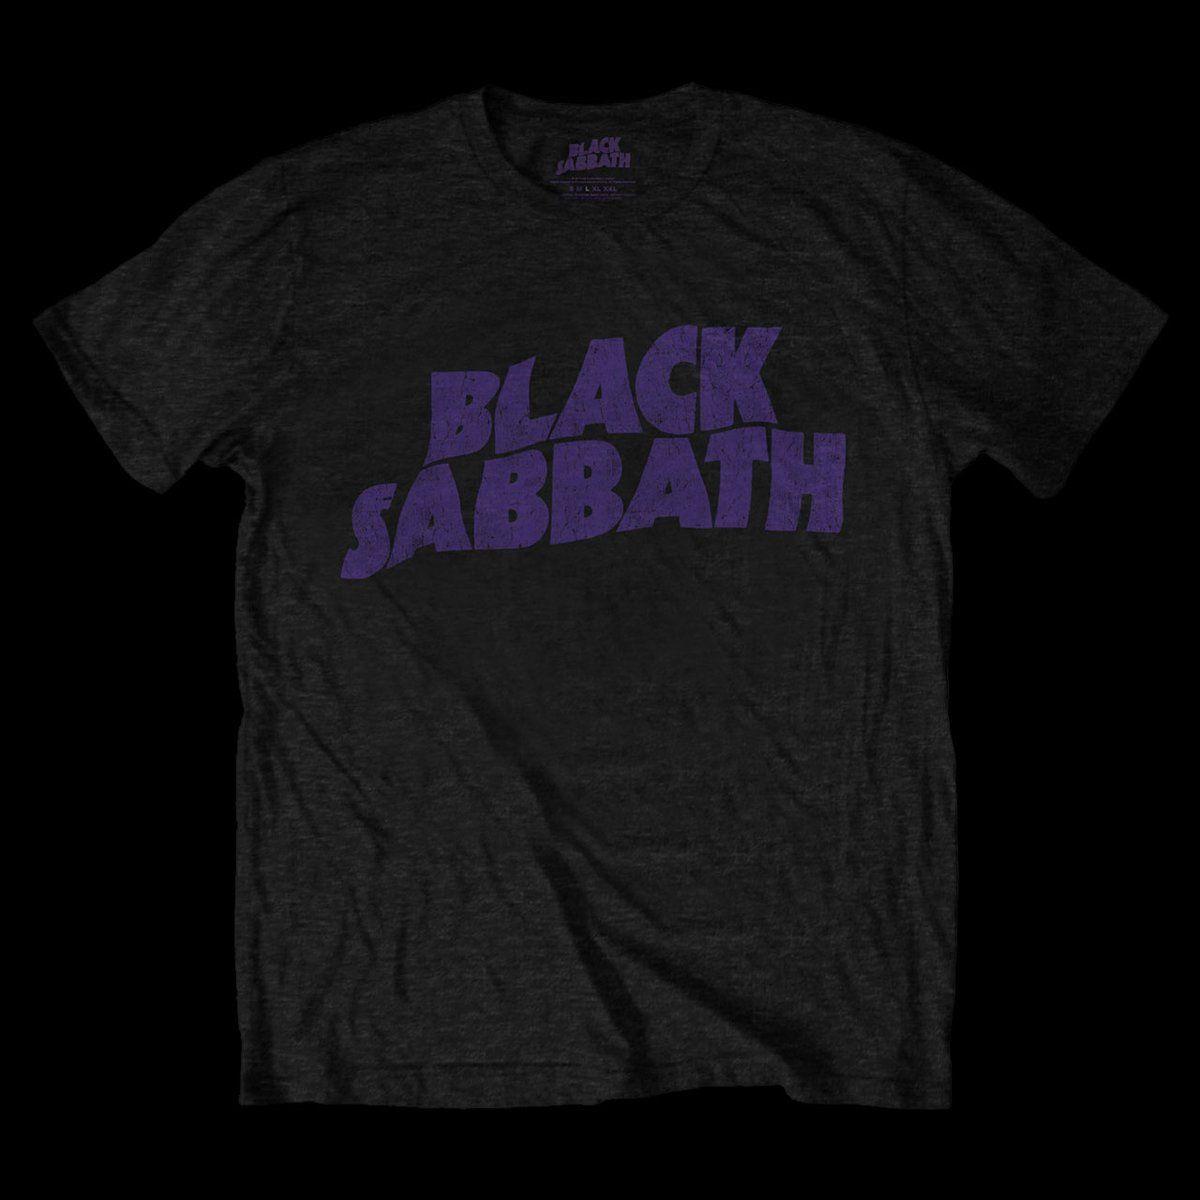 Black and Purple Logo - Black Sabbath Logo (T Shirt)